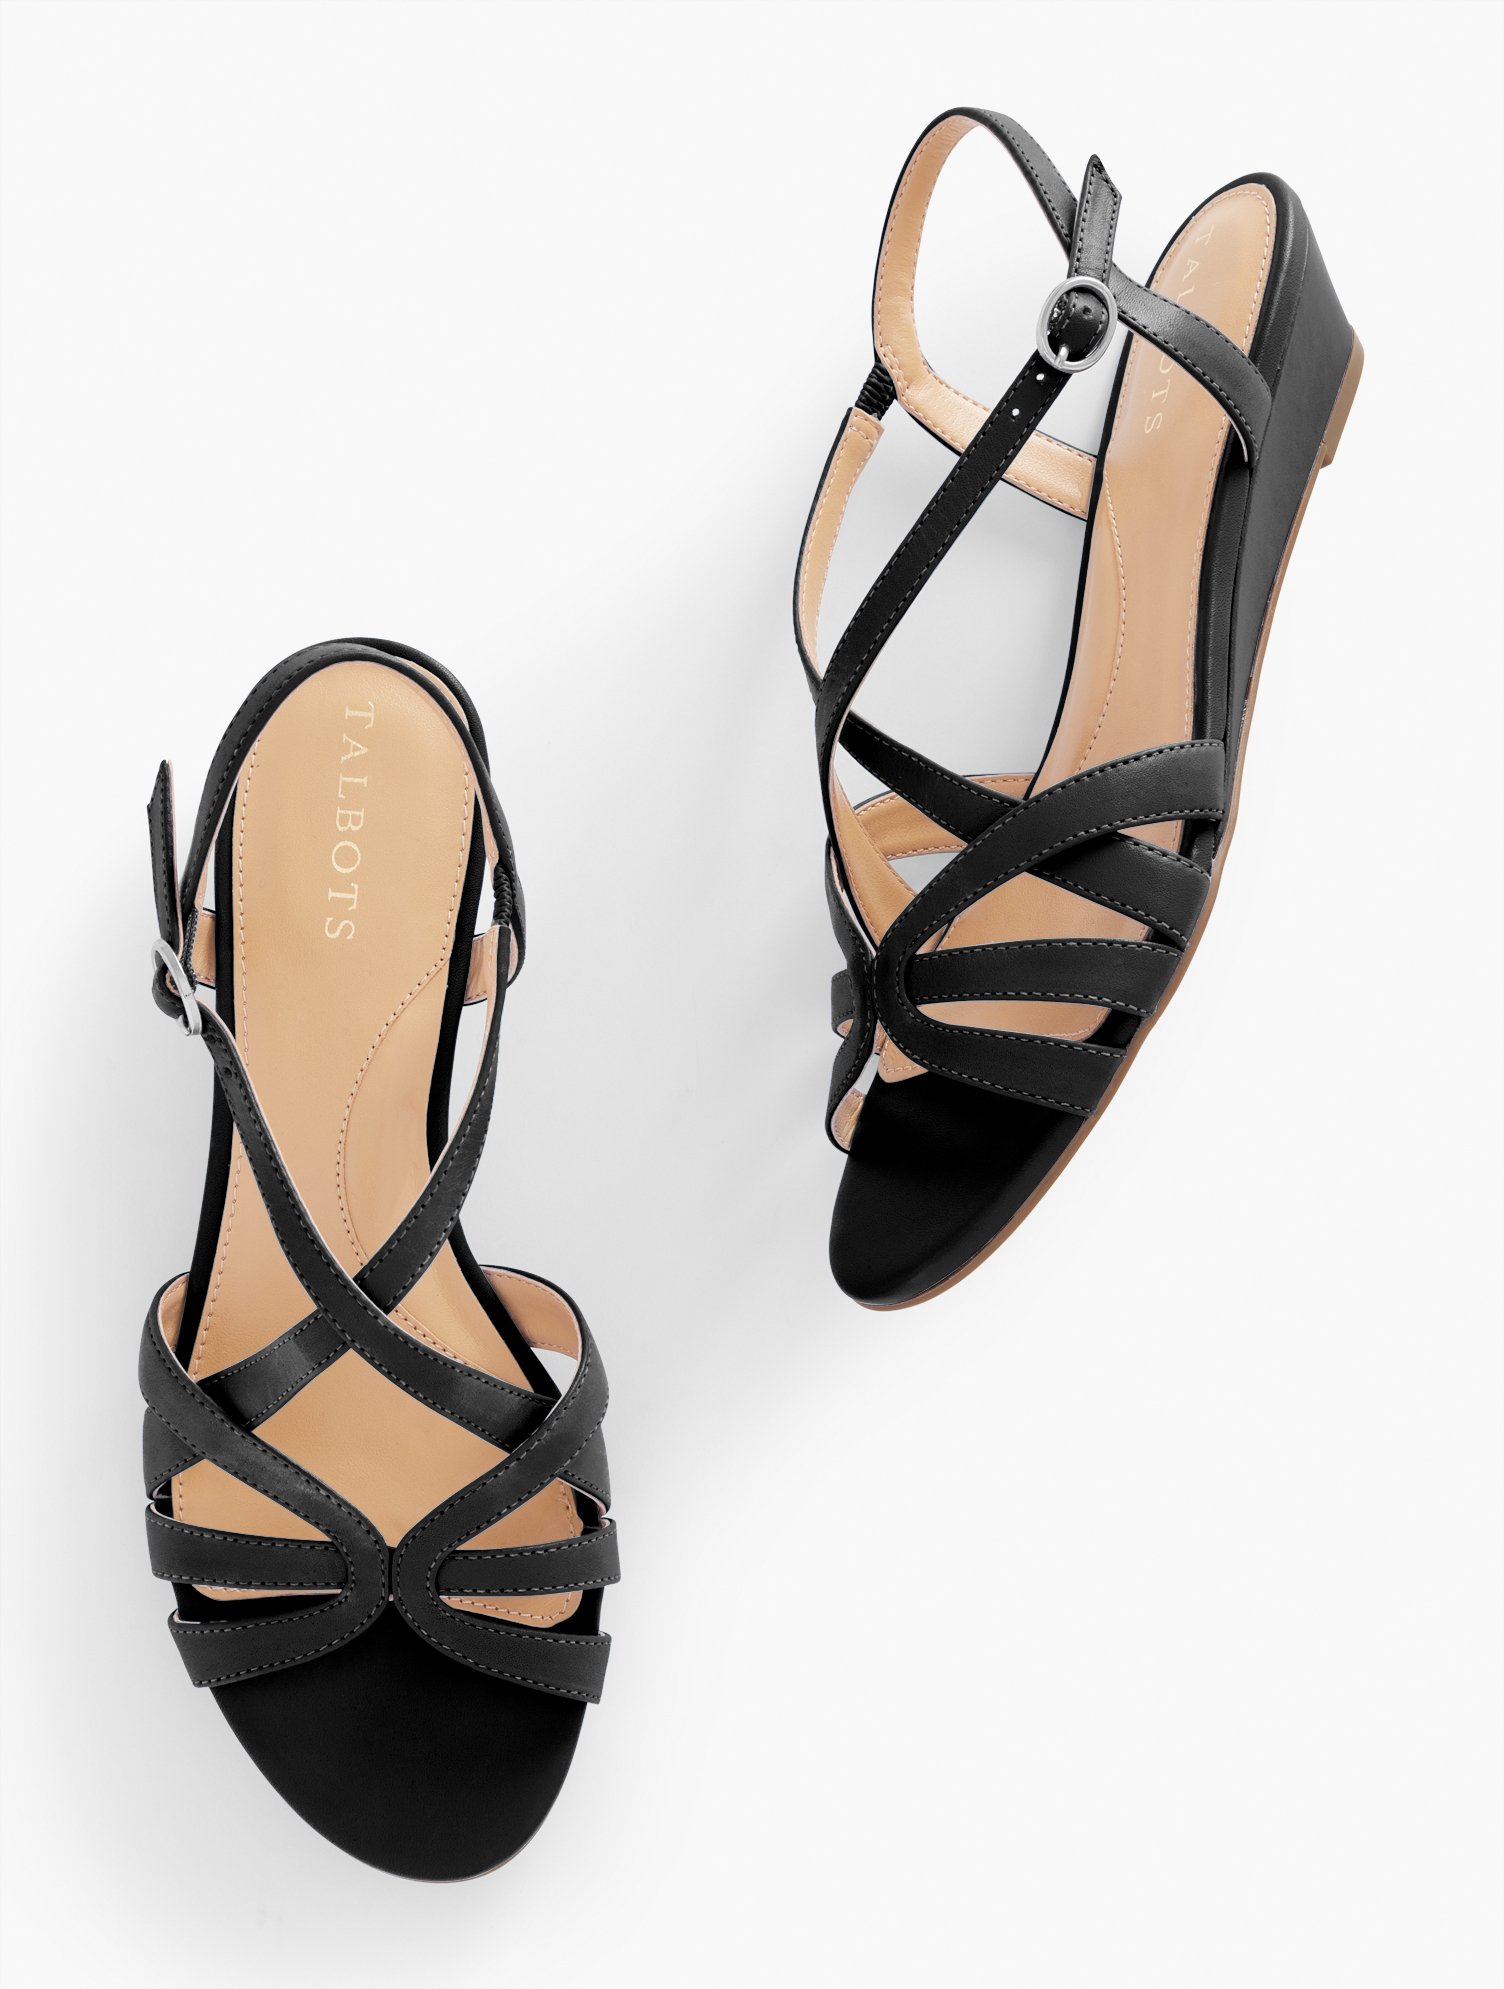 Talbots Capri Nappa Wedge Sandals - Black - 9m